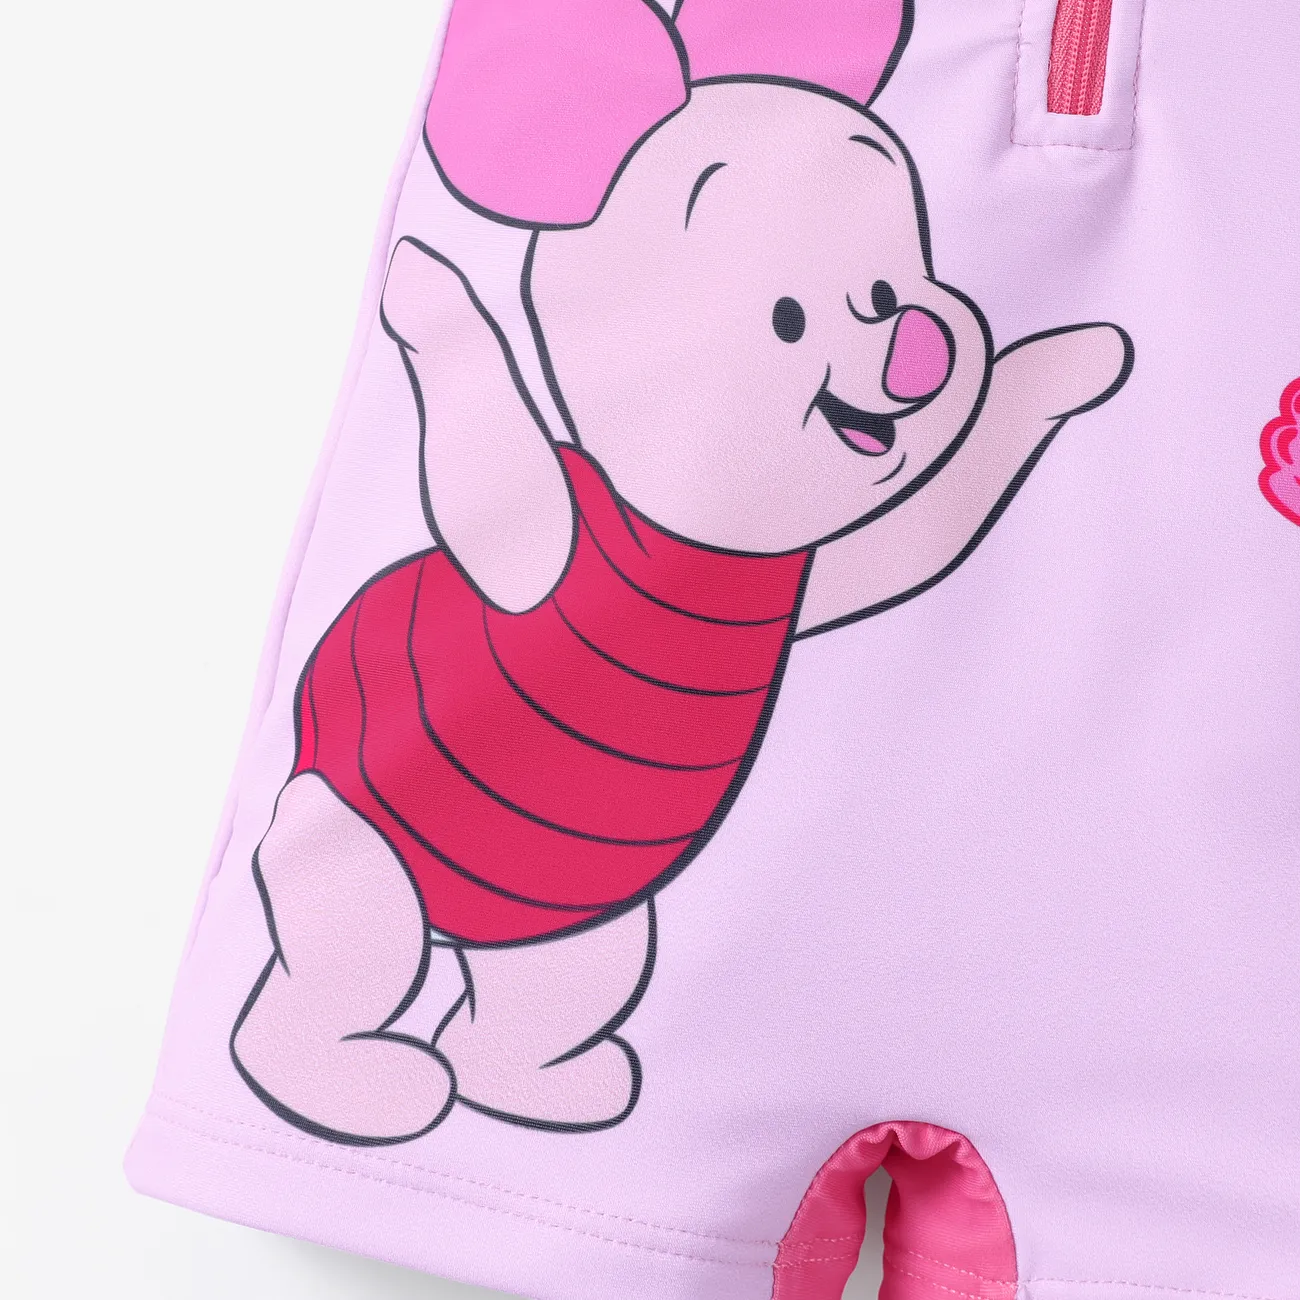 Disney Winnie the Pooh Baby Unisex Reißverschluss Sportlich Kurzärmelig Badeanzüge rosa big image 1